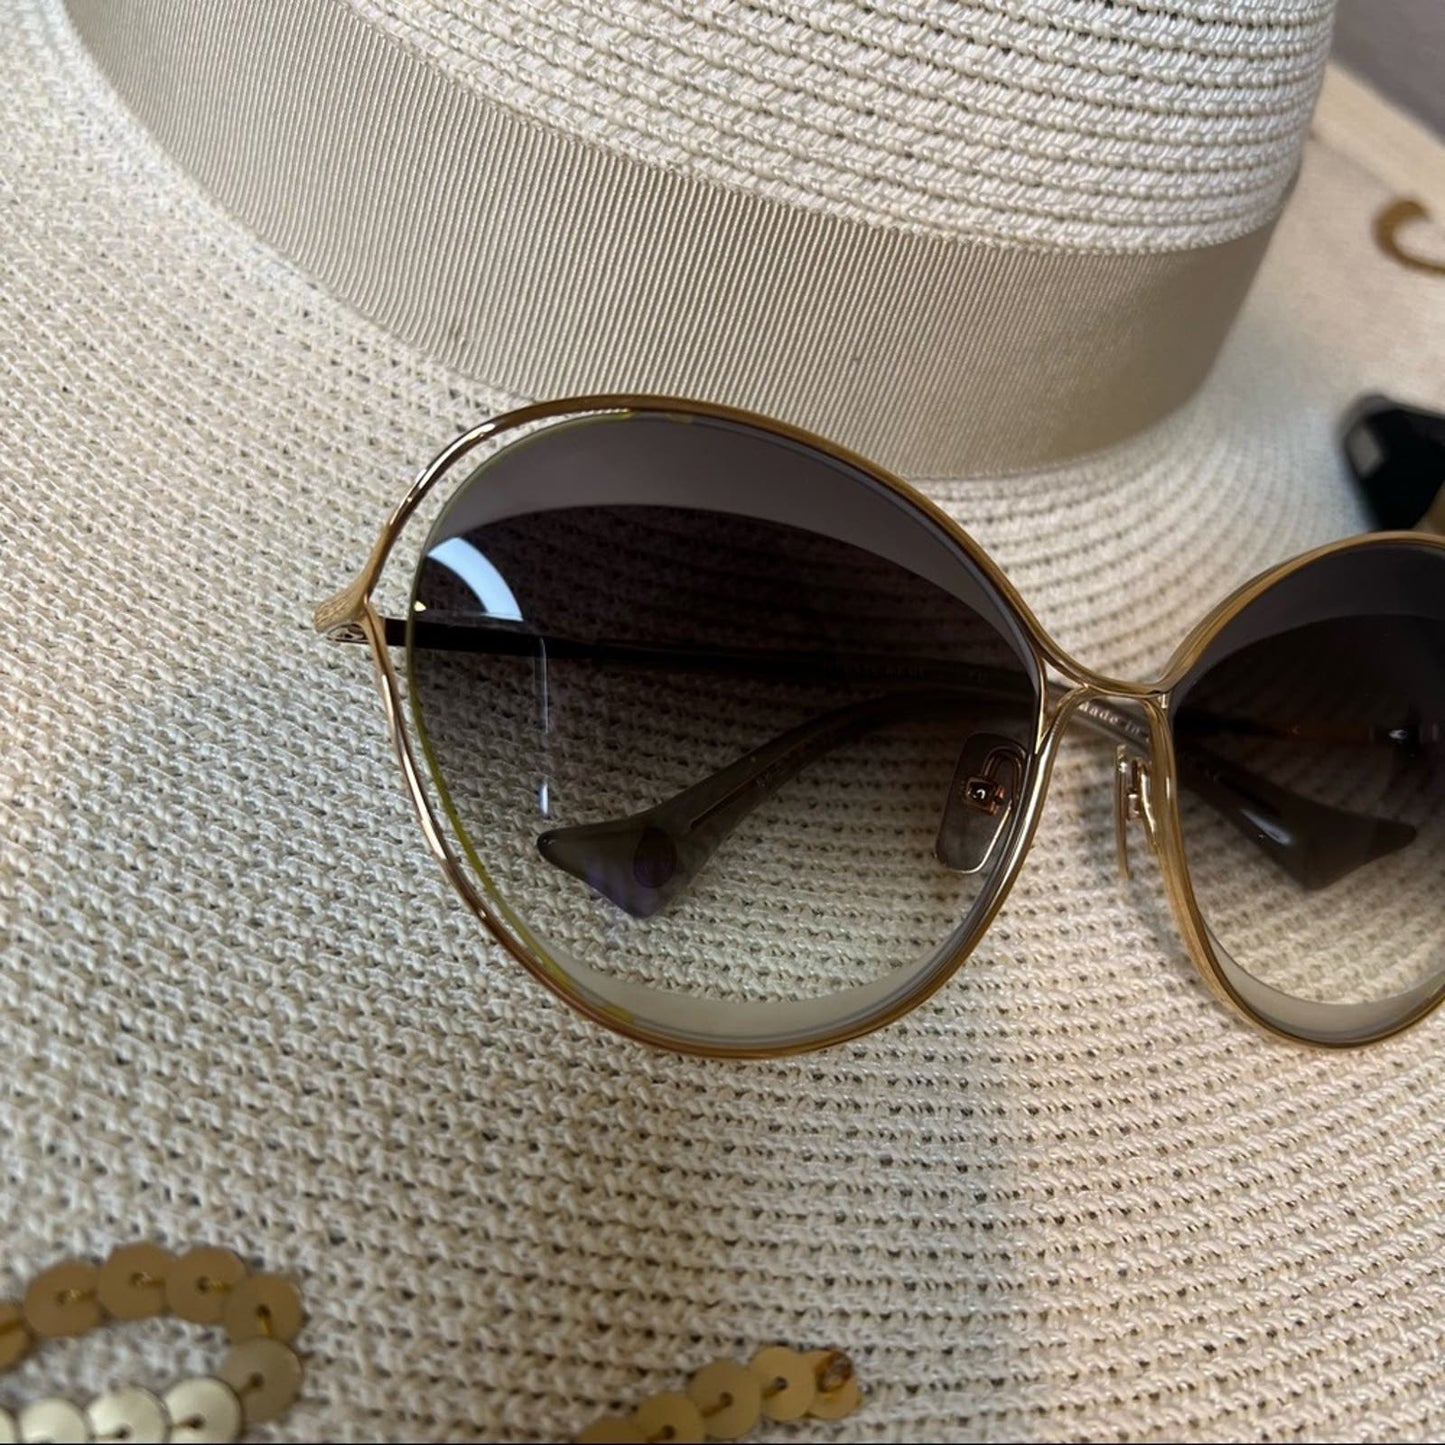 DITA Gray & Gold “Sasu” Sunglasses w/ Leather Roll-Up Case, NIB!